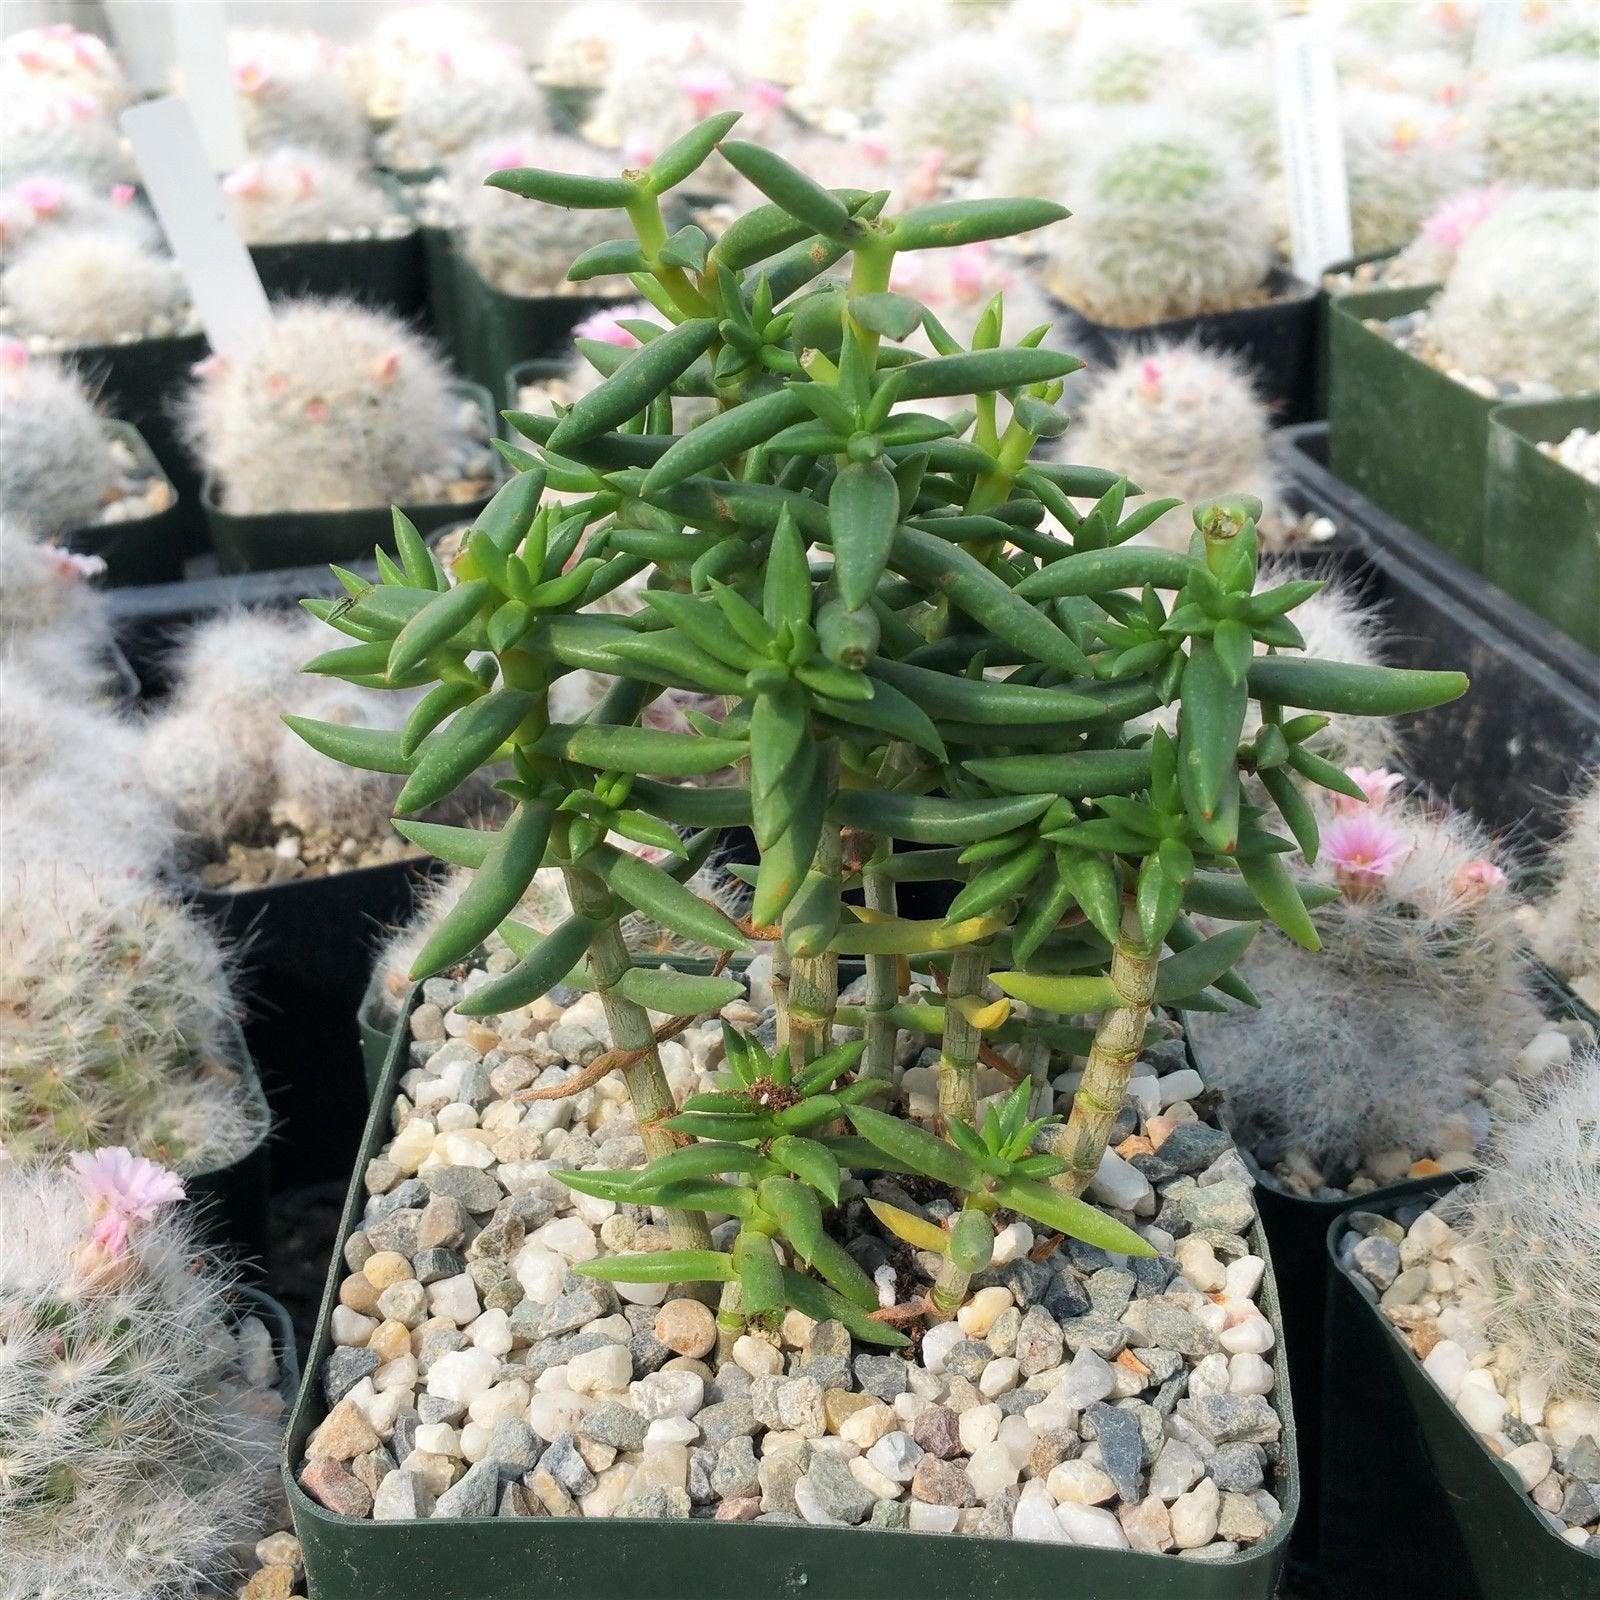 Miniature Pine Tree Plant Care: Water, Light, Nutrients